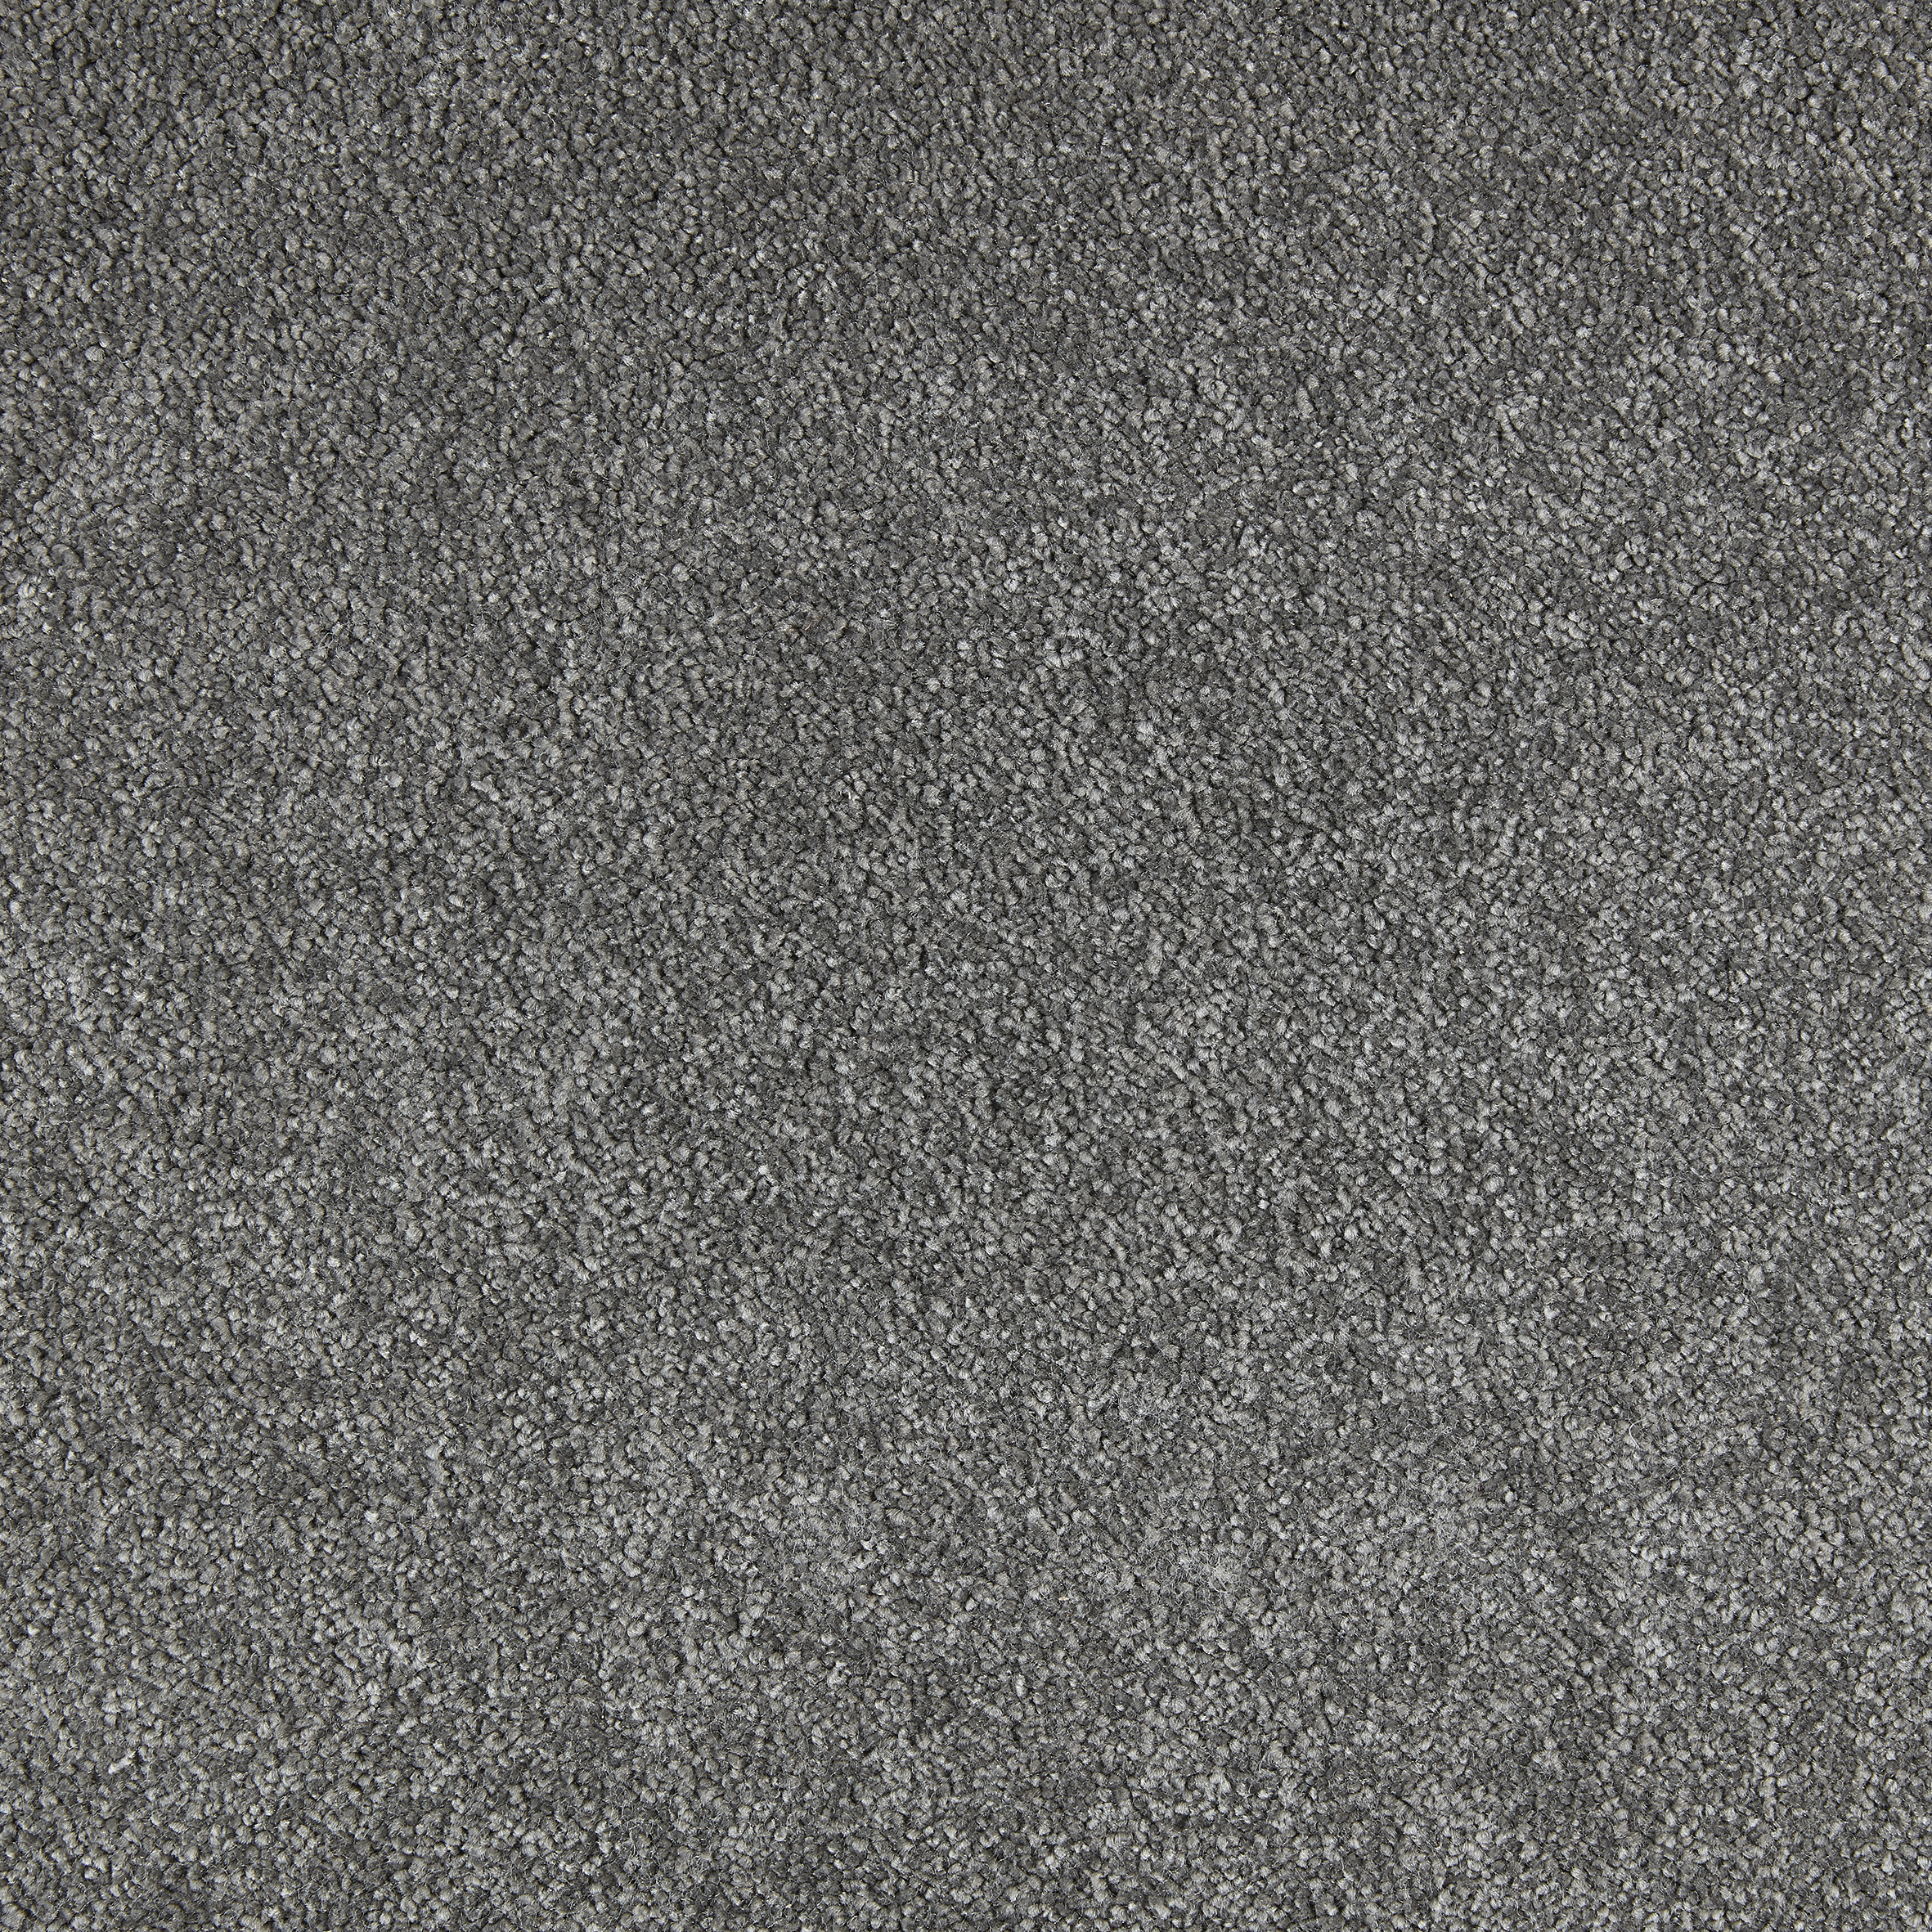 Mocheta dormitor Charisma gri inchis cod 832 fir taiat inaltime 9 mm fir rasucit pentru interior